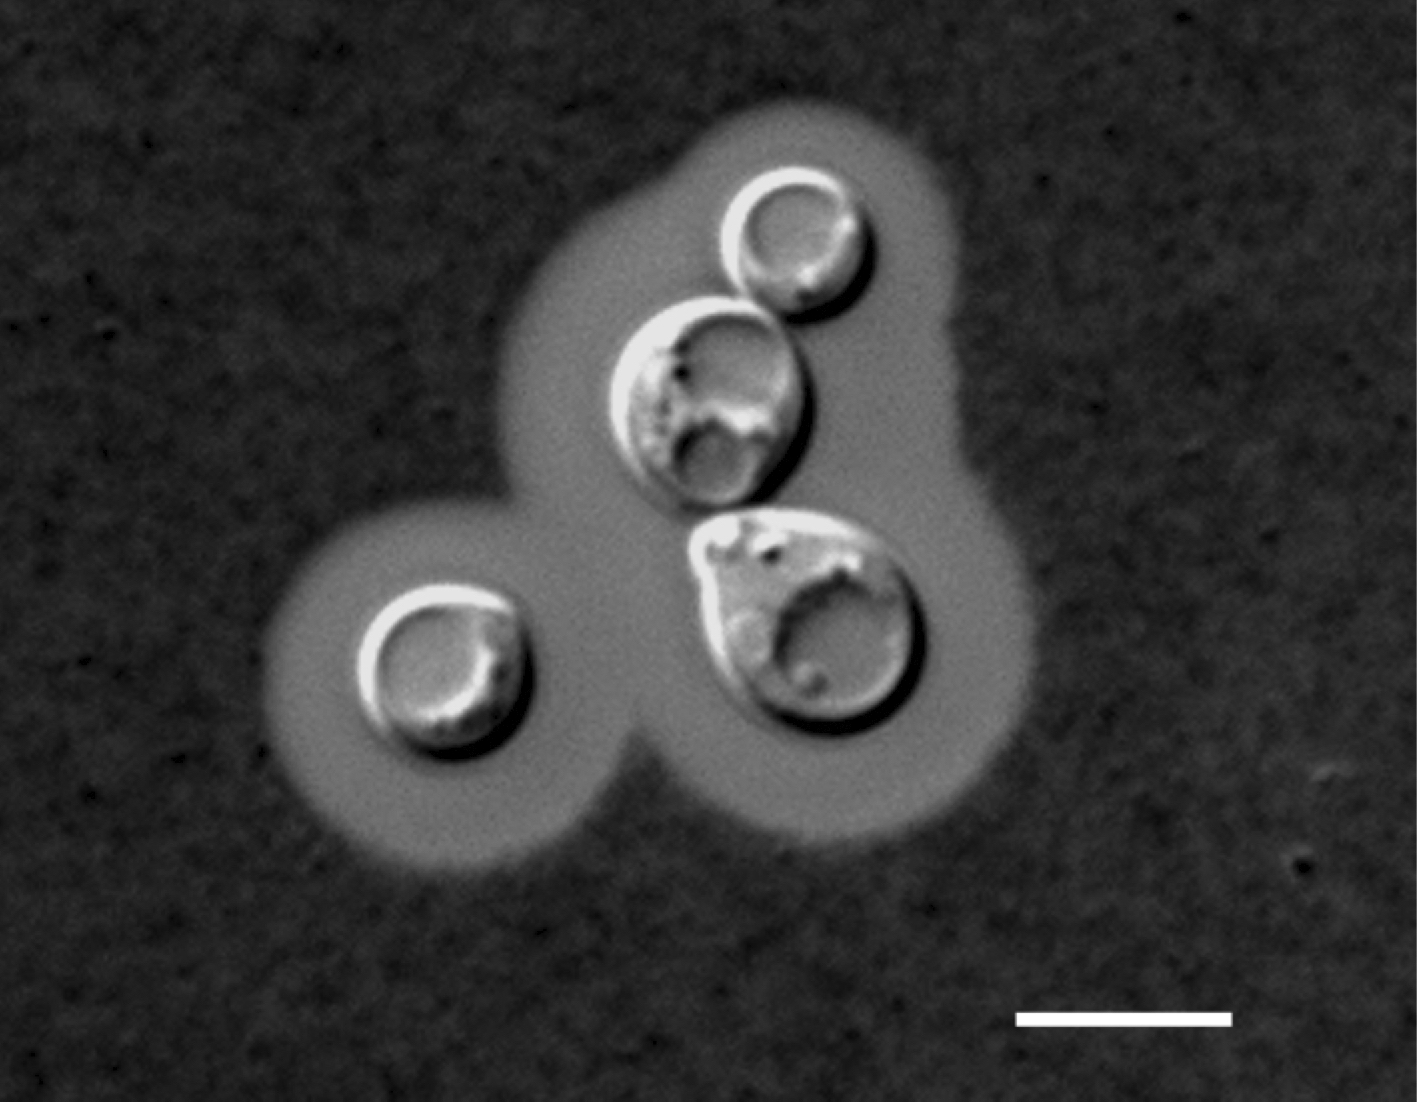 The image of Cryptococcus gattii